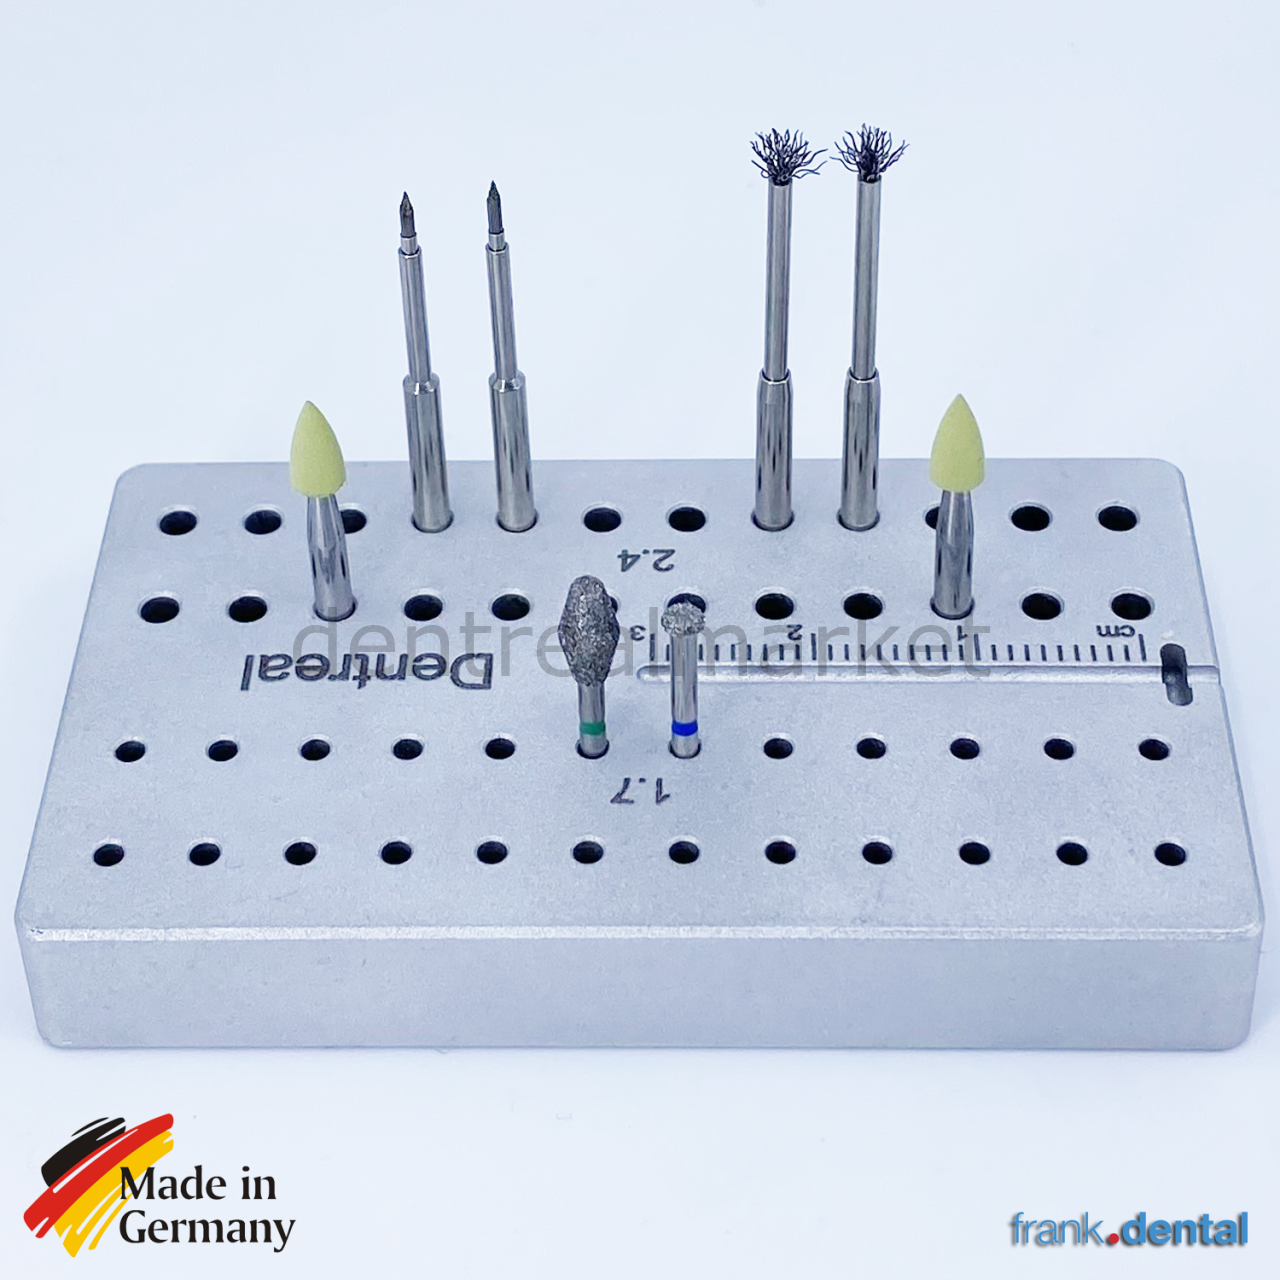 DentrealStore - Dentreal Nitibrush Peri-Implantitis Bur Set